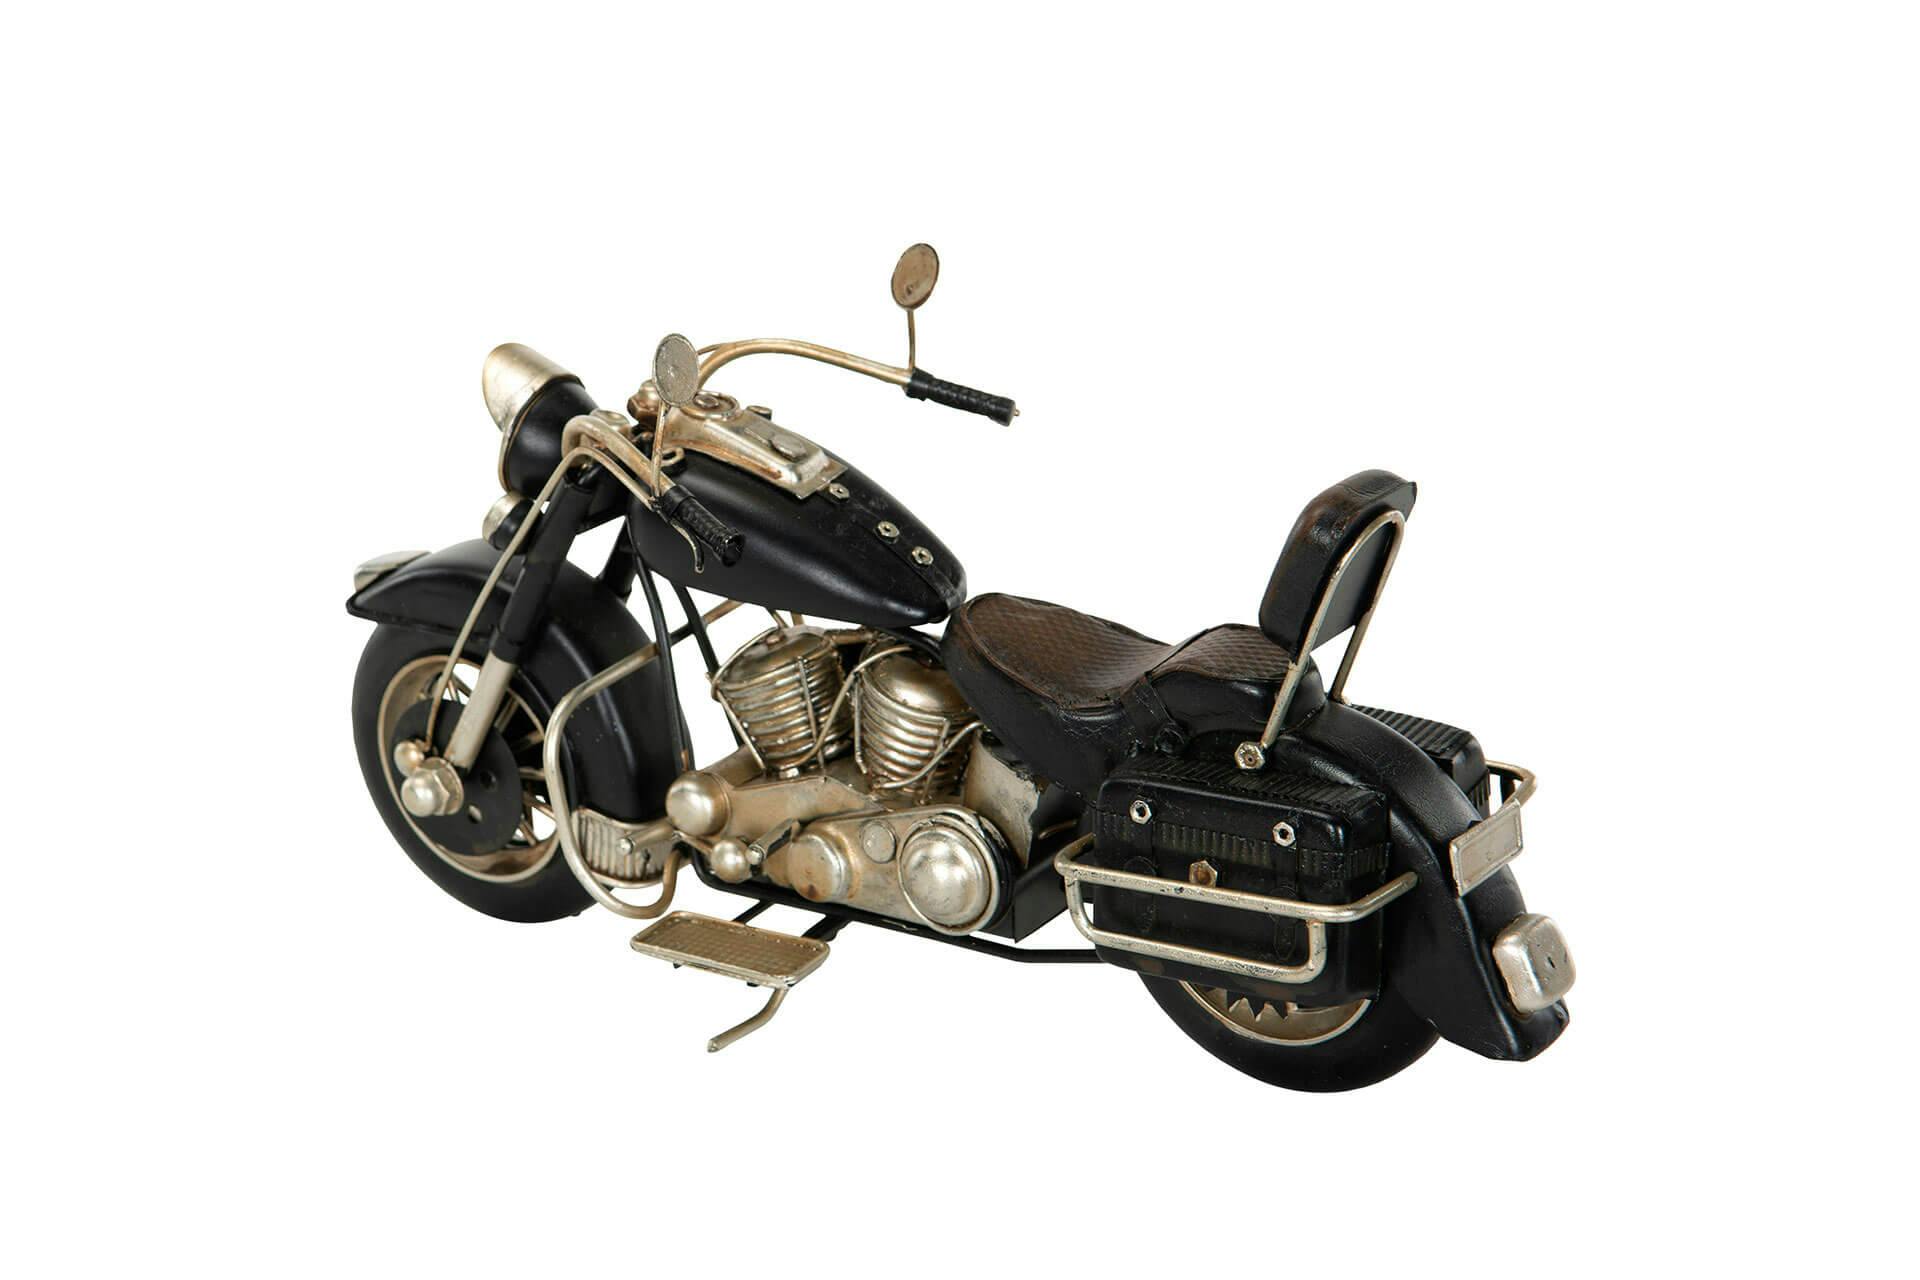 Motorcykel Svart Metall - A Lot Decoration